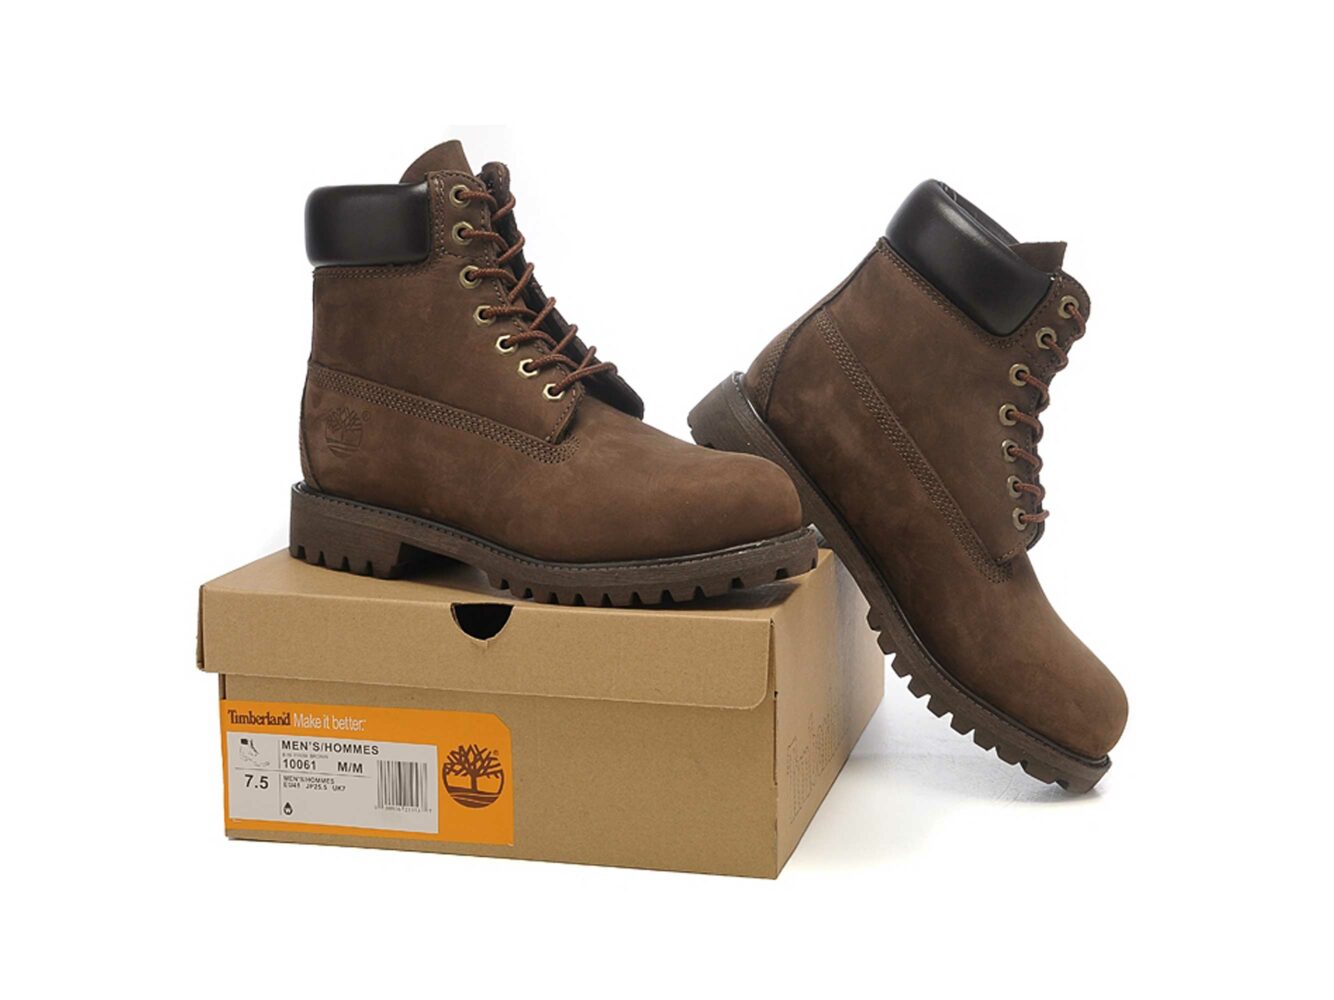 timberland 6 inch boots brown 10061 brown купить